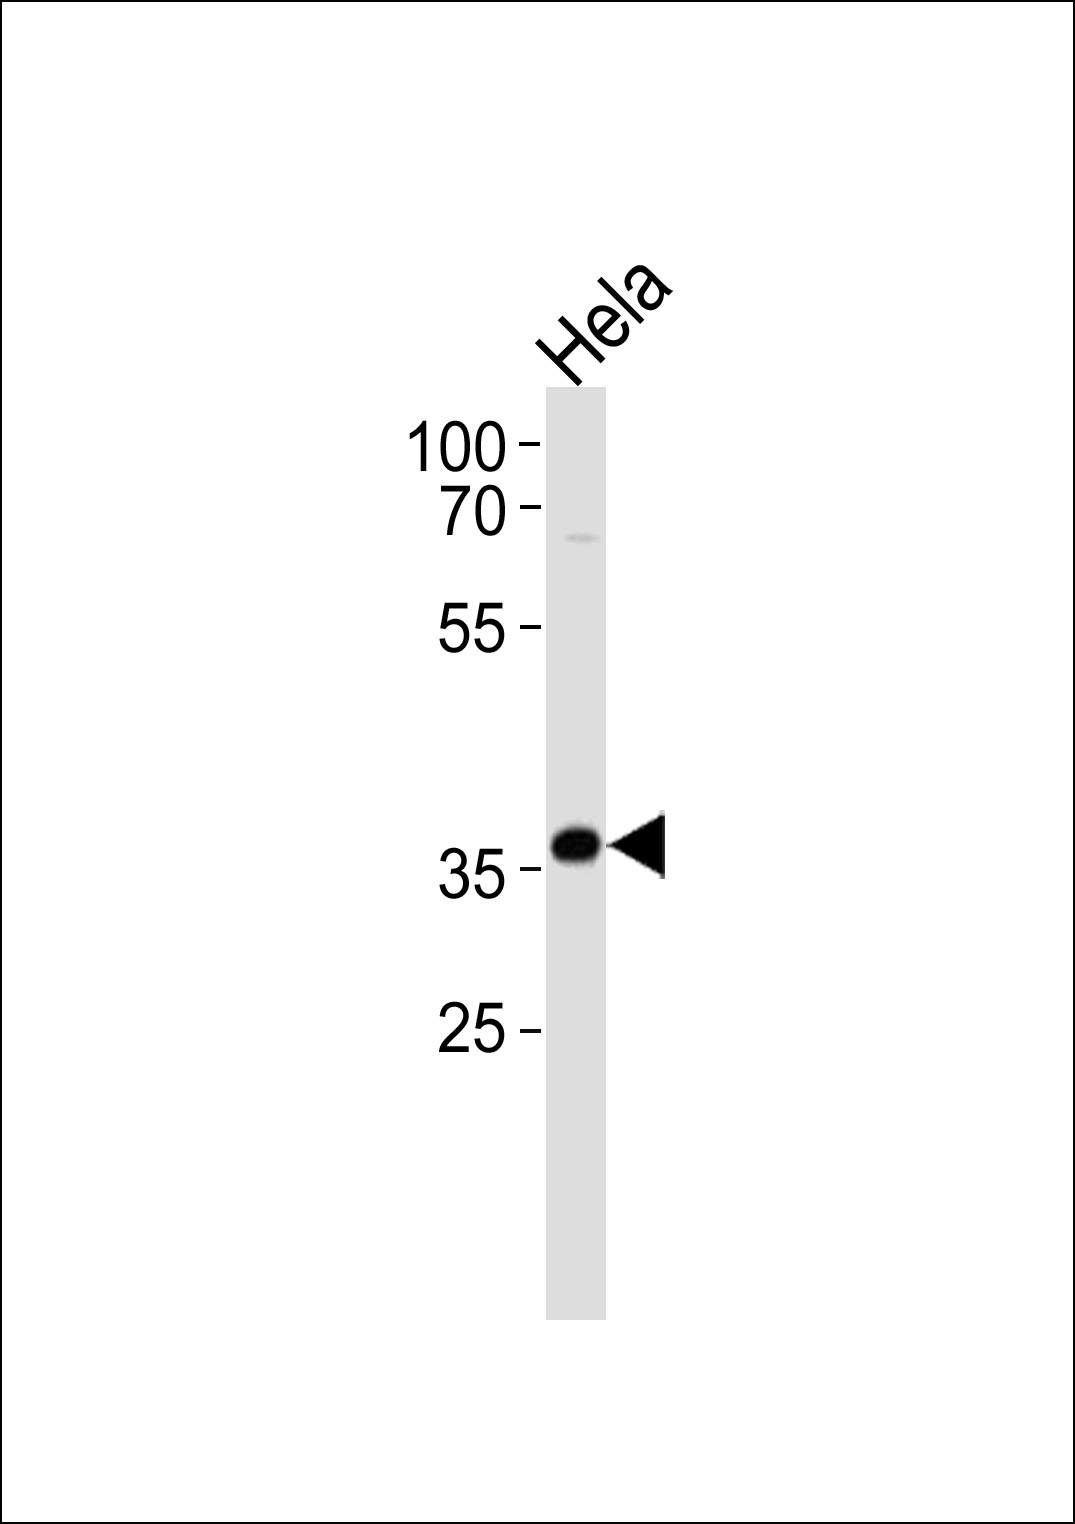 AKR1C3 Antibody (Center) (Cat. #AP11656c) western blot analysis in Hela cell line lysates (35ug/lane).This demonstrates the AKR1C3 antibody detected the AKR1C3 protein (arrow).